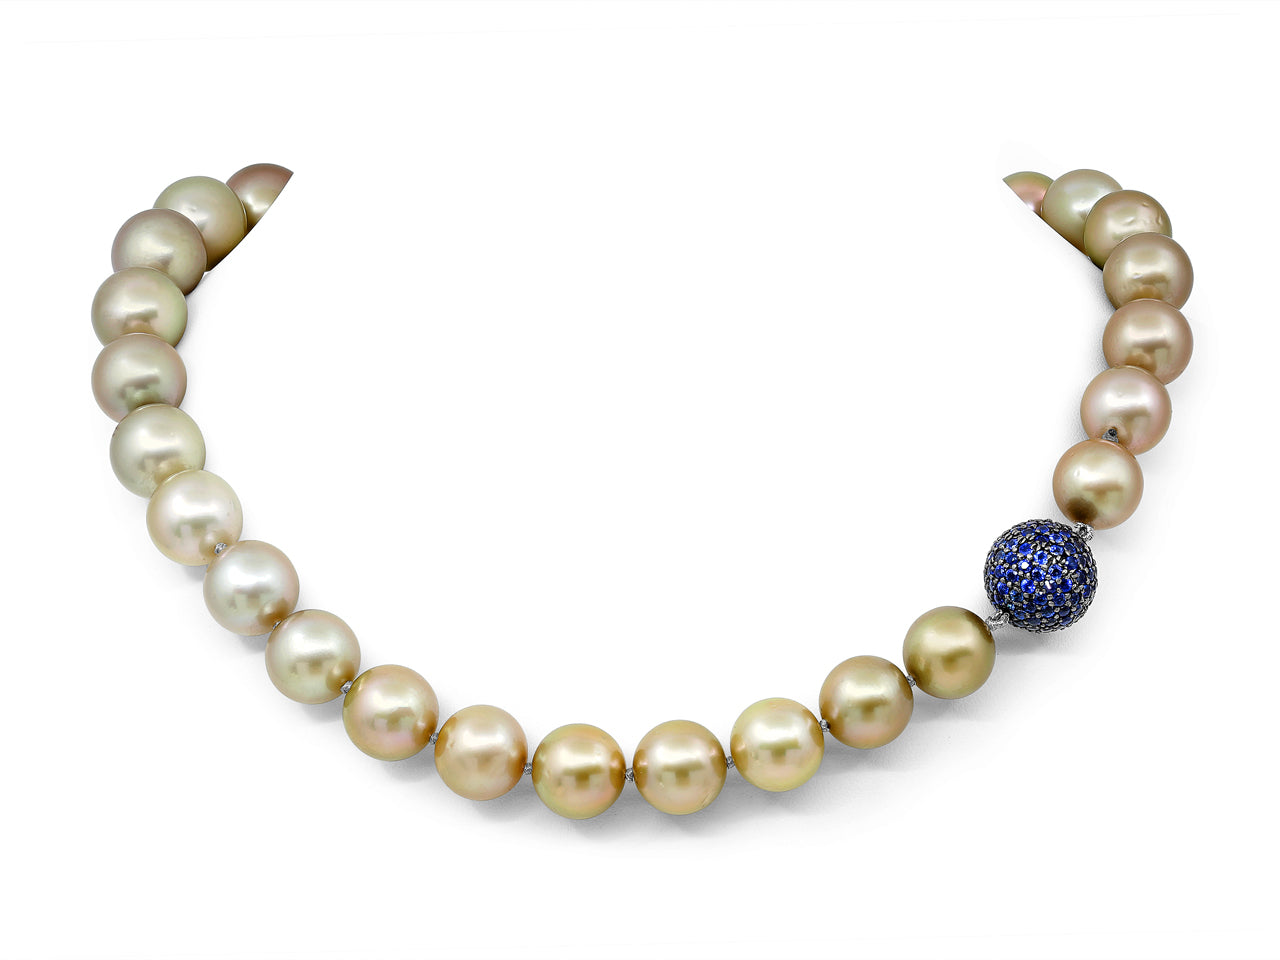 Kazanjian Pistachio South Sea Pearl Necklace with a Sapphire Ball Clas